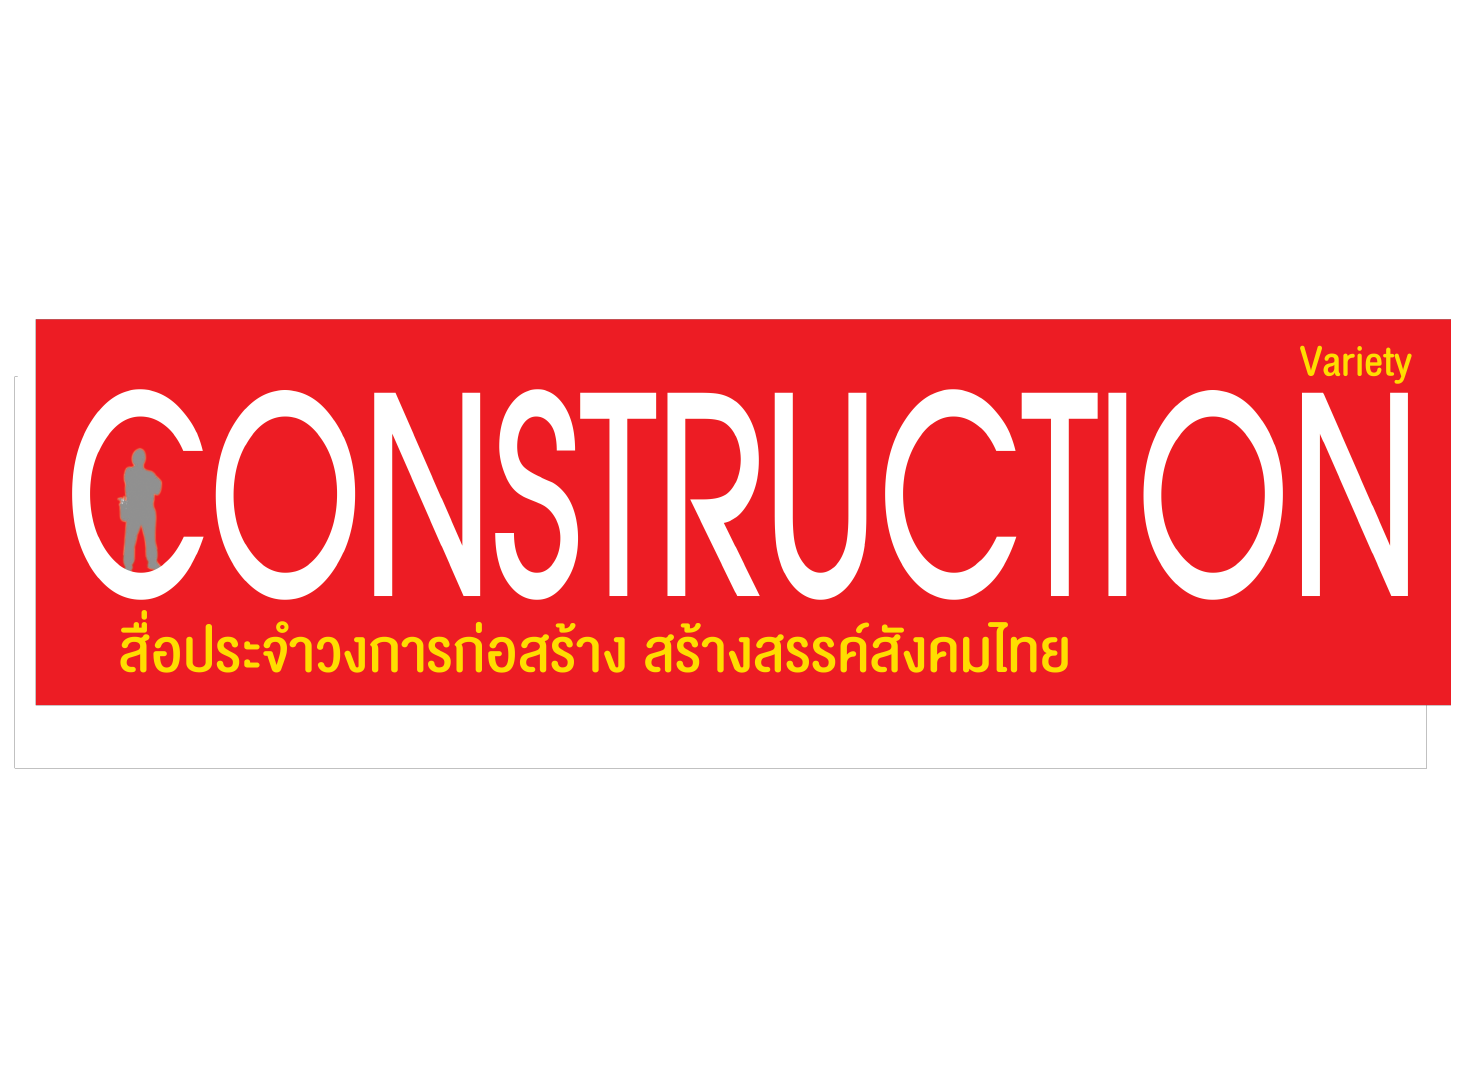 Construction variety